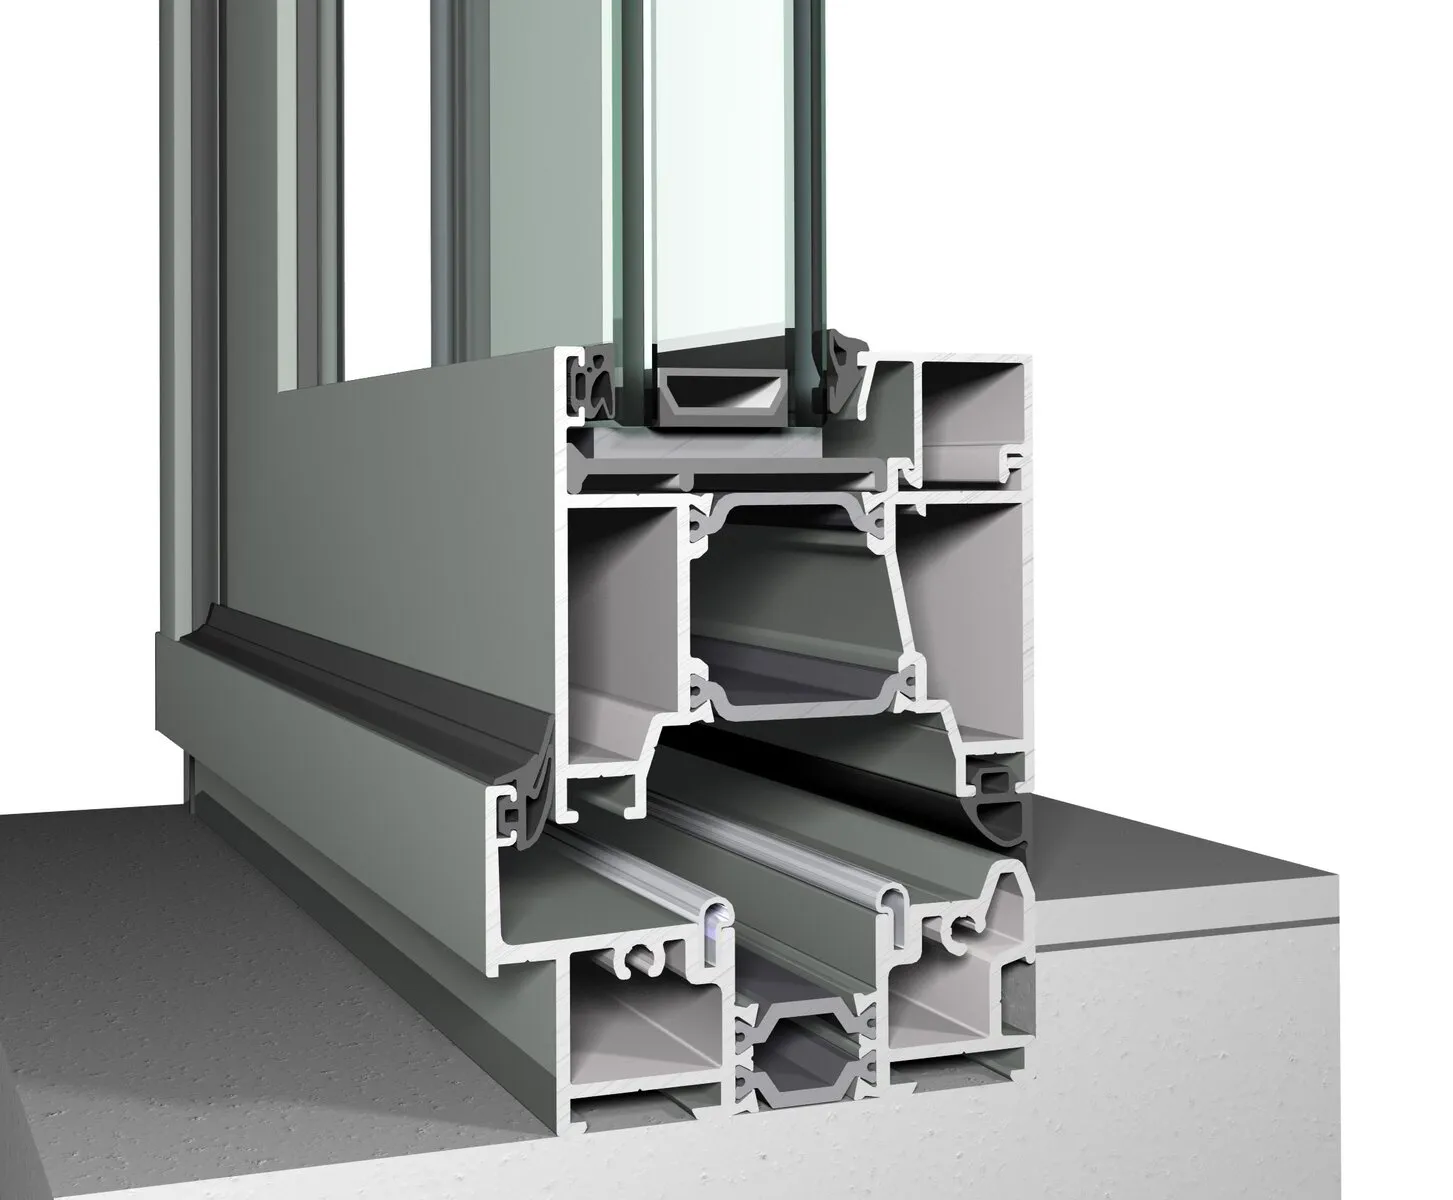 Hollow aluminium door frame